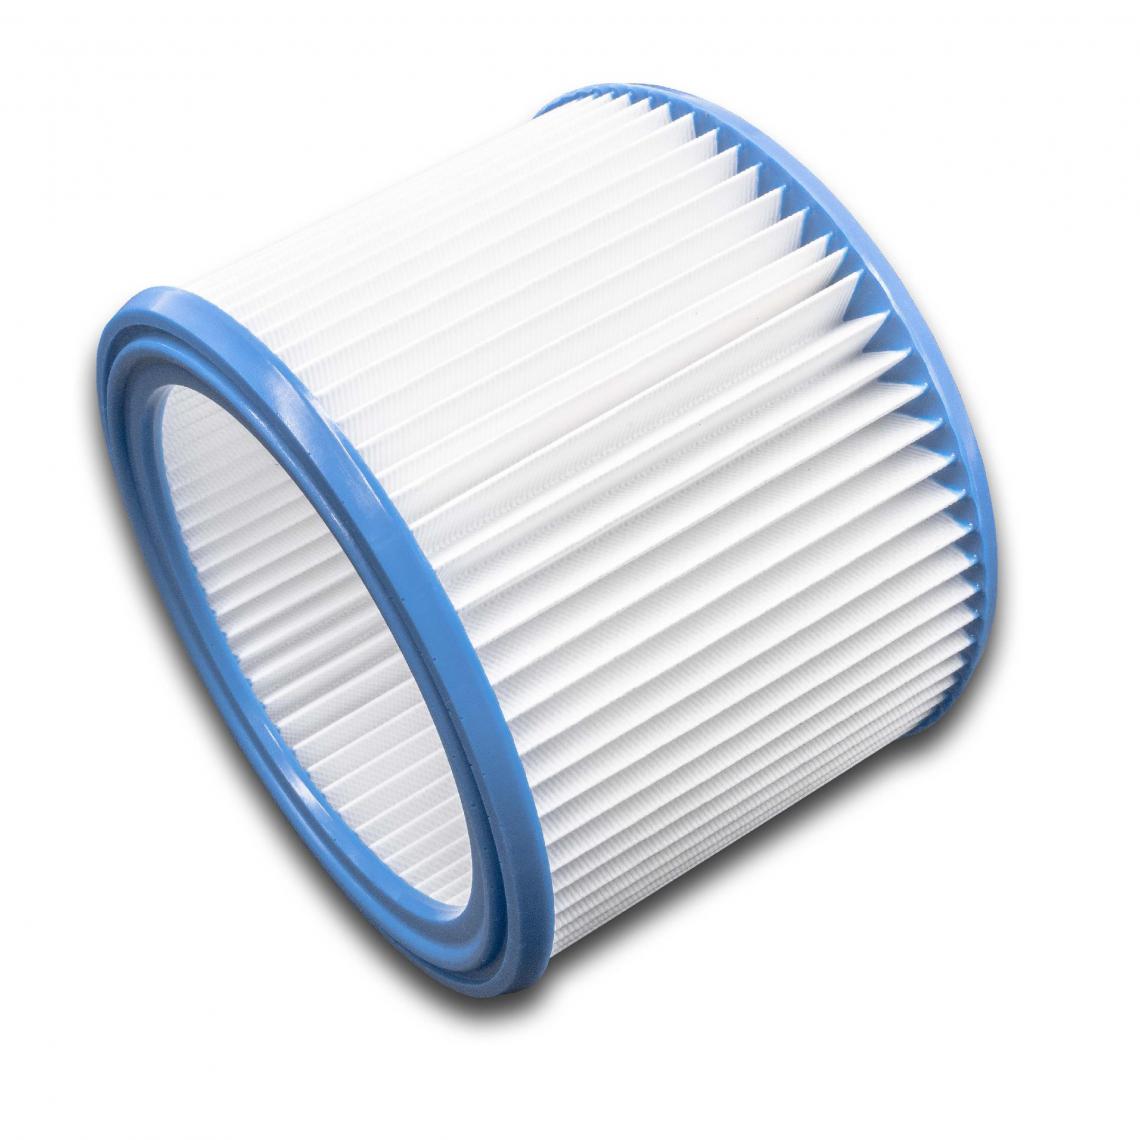 Vhbw - vhbw Set de filtres 5x Filtre plissé compatible avec Nilfisk Aero 20-01, 20-01 Inox, 20-11, 20-21 aspirateur à sec ou humide - Filtre à cartouche - Accessoire entretien des sols